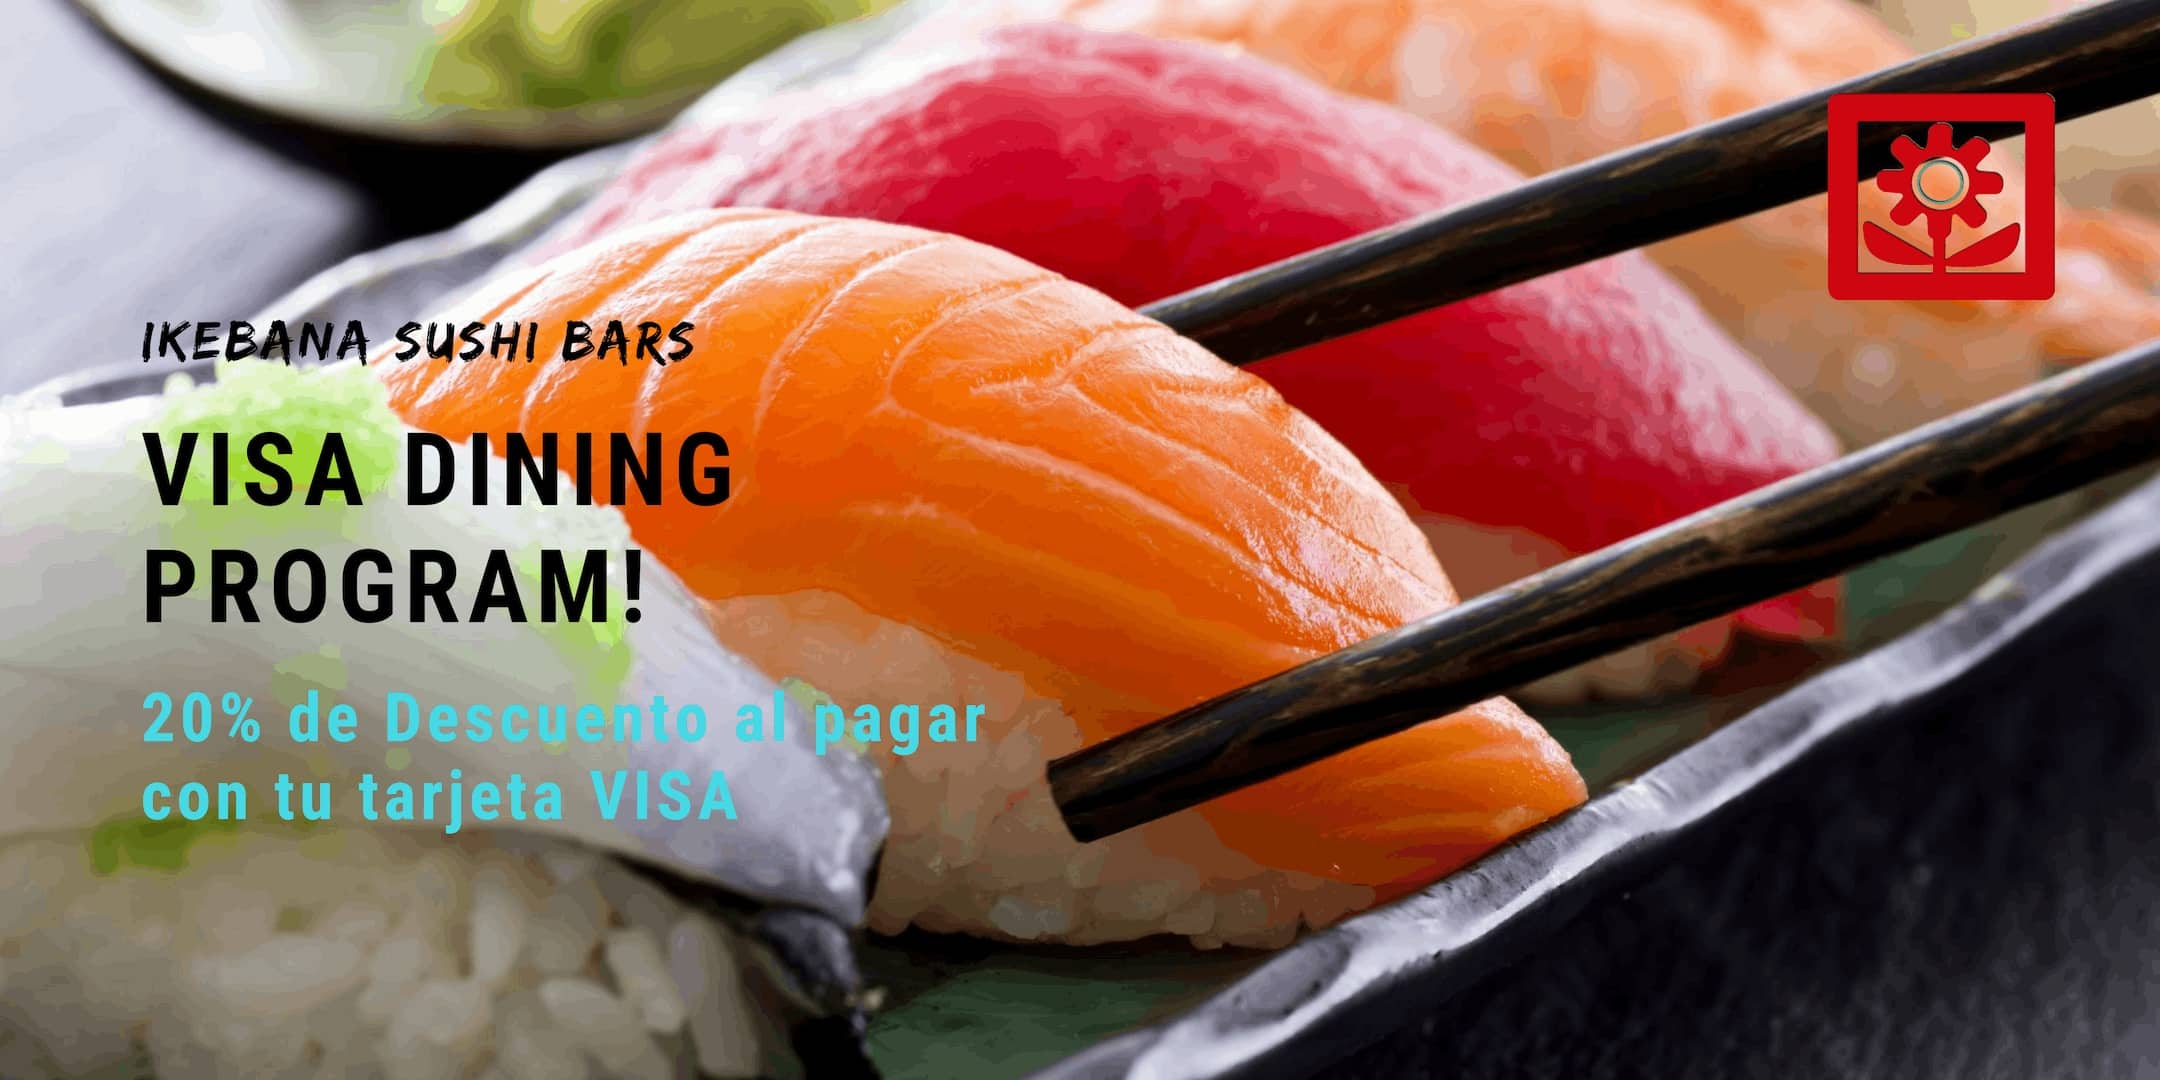 Visa Dining Program Ikebana Sushi Bar Guaynabo